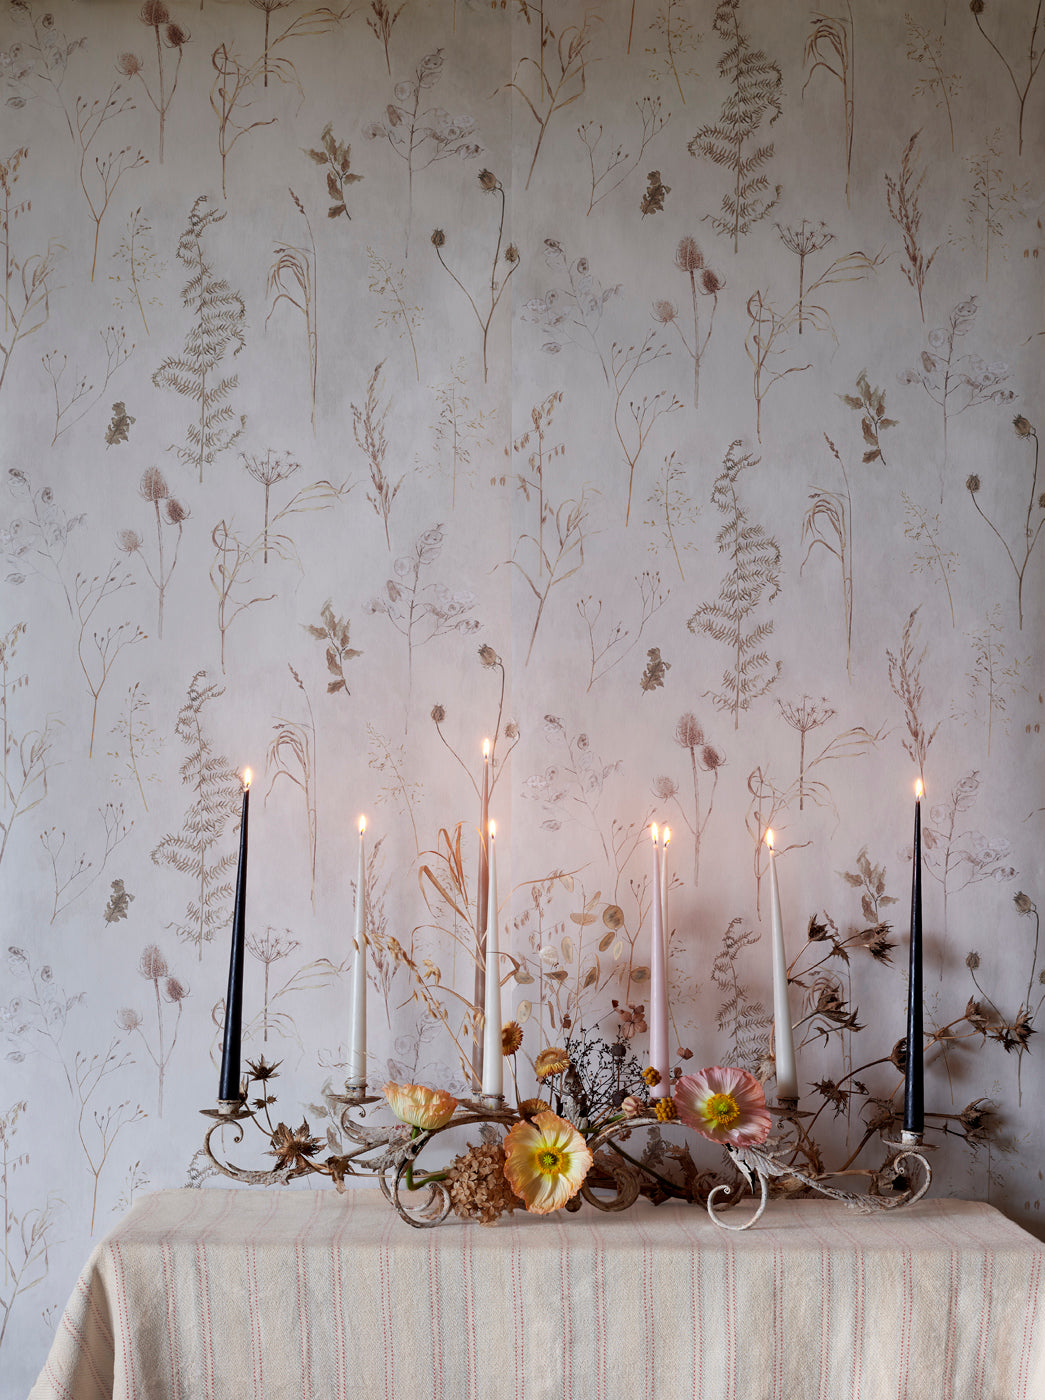 Hamilton-weston-wallpaper-Flora-Roberts-Autumn-silhouettes-leaves-ferns-grasses-faded-floral-woodland-elegant-sparse-design-Sepia- 